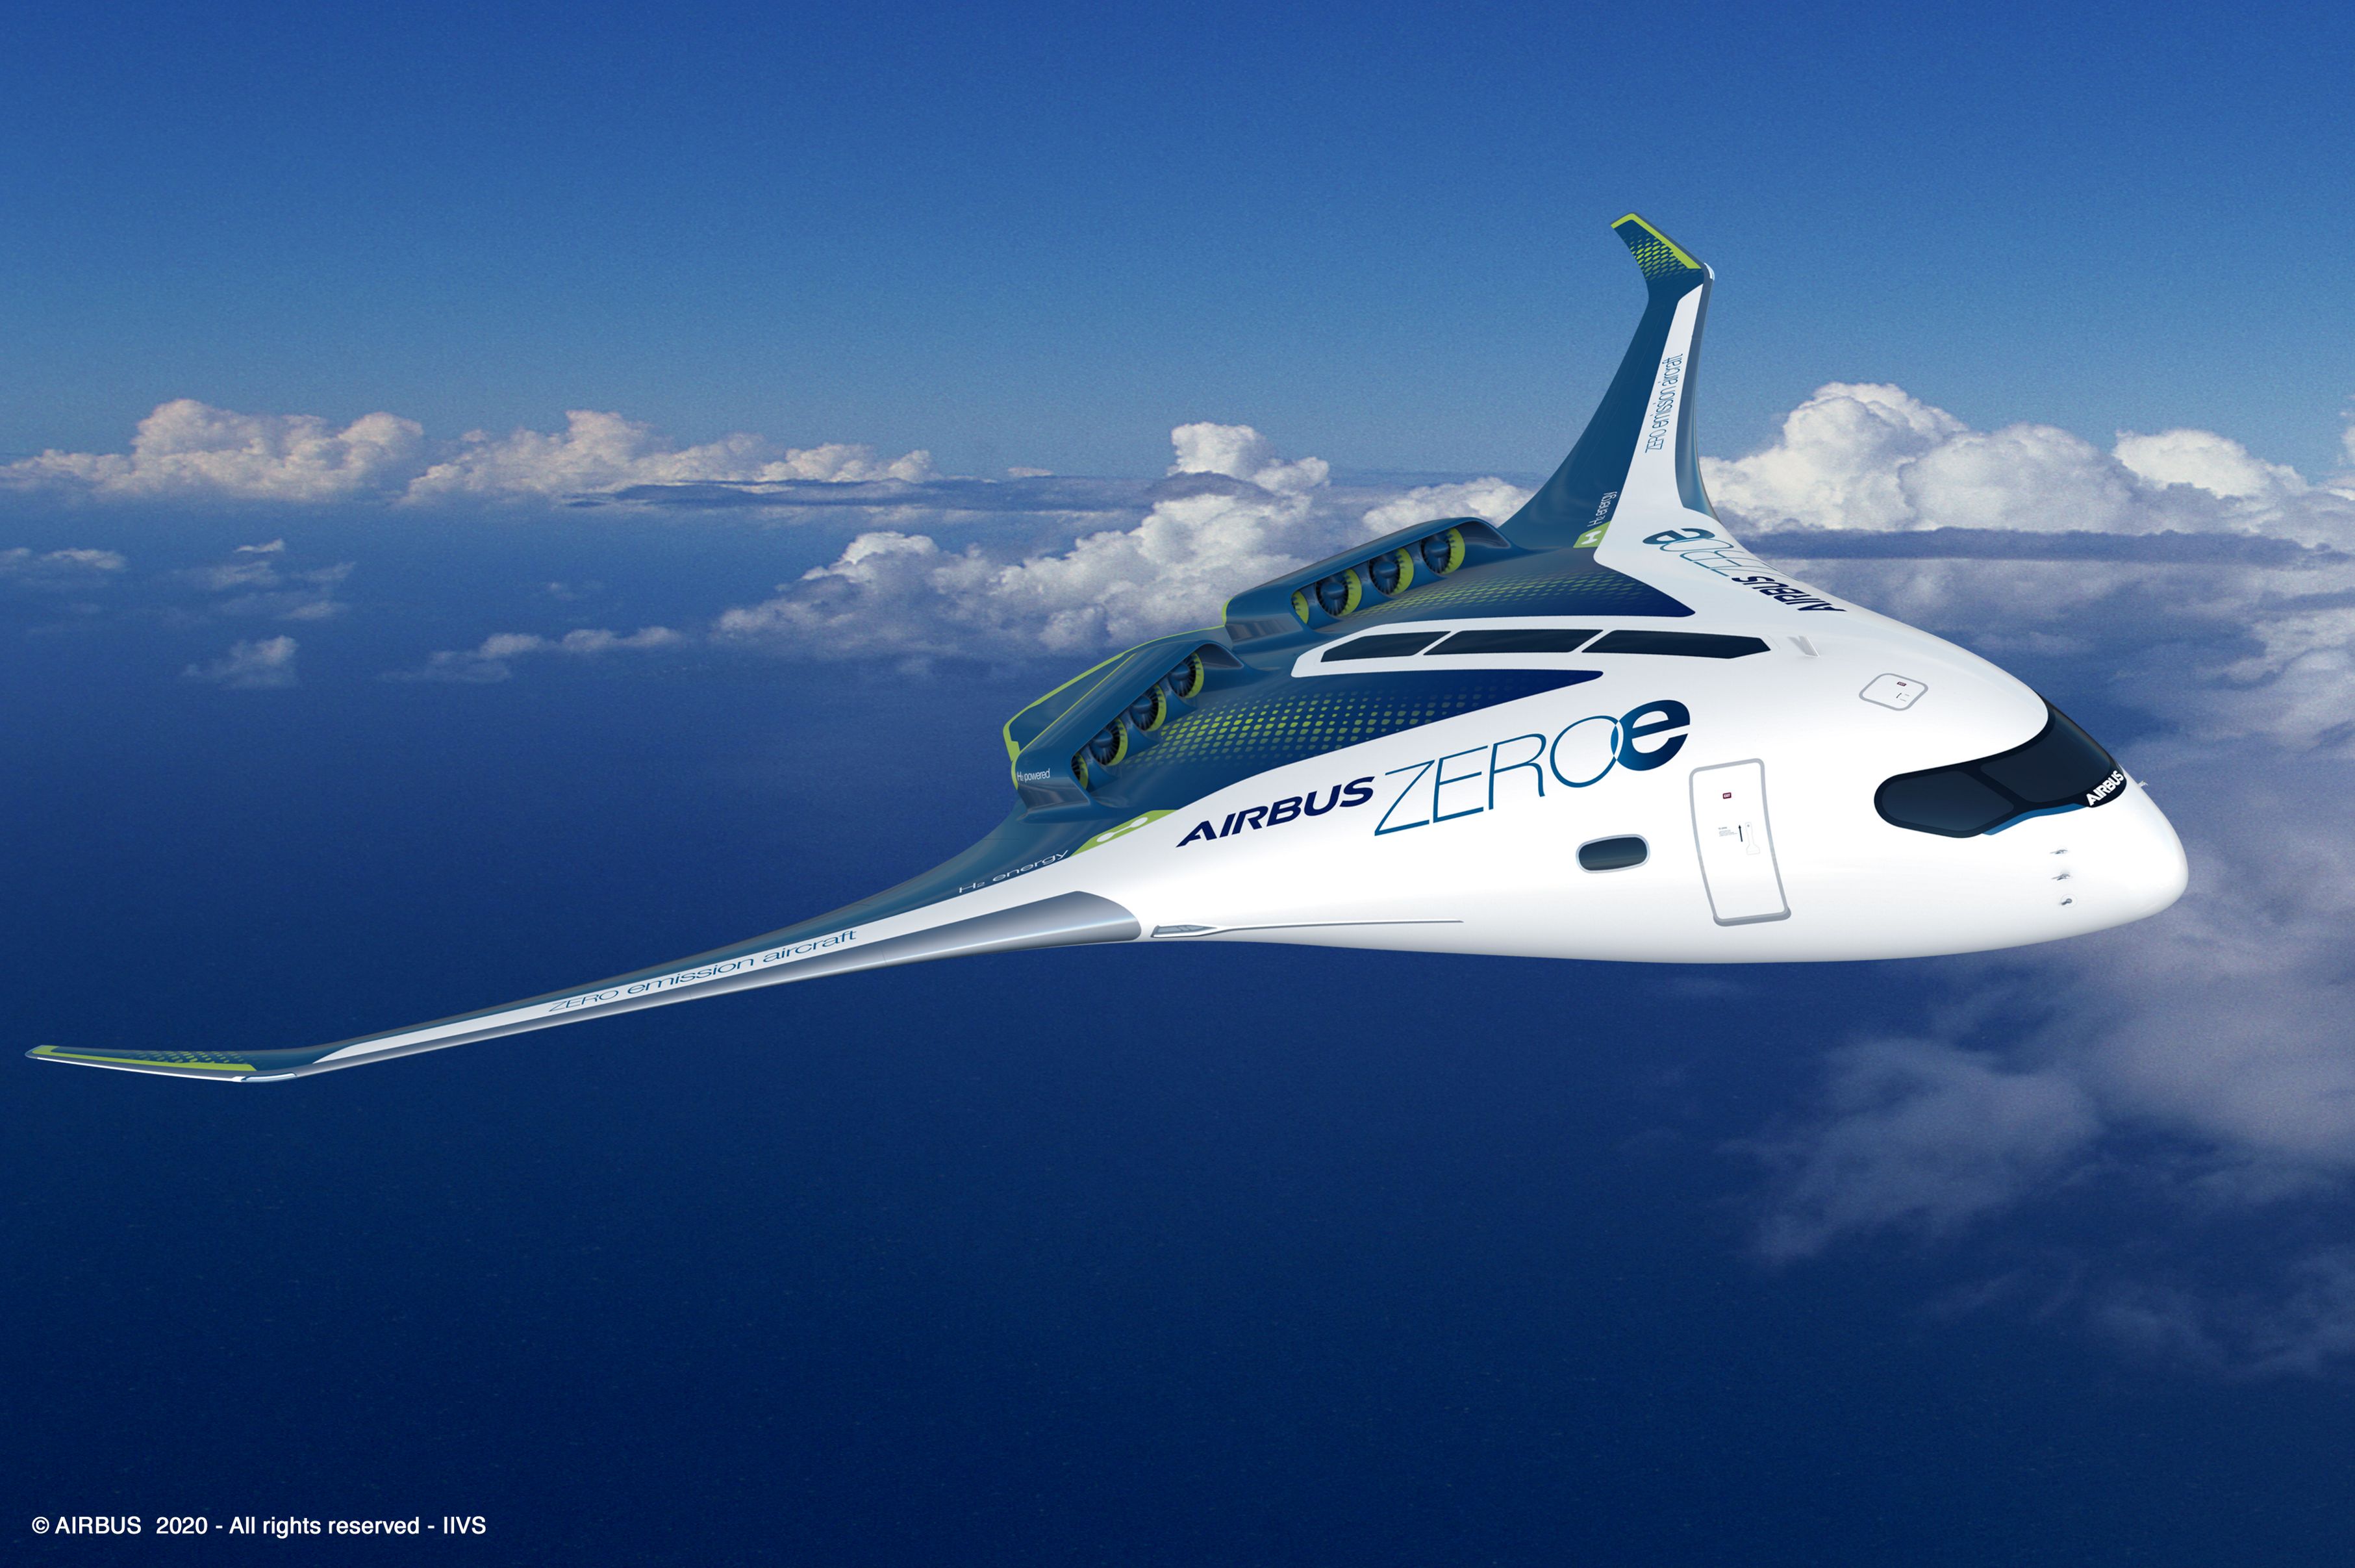 Airbus reveals new zero emission concept aircraft